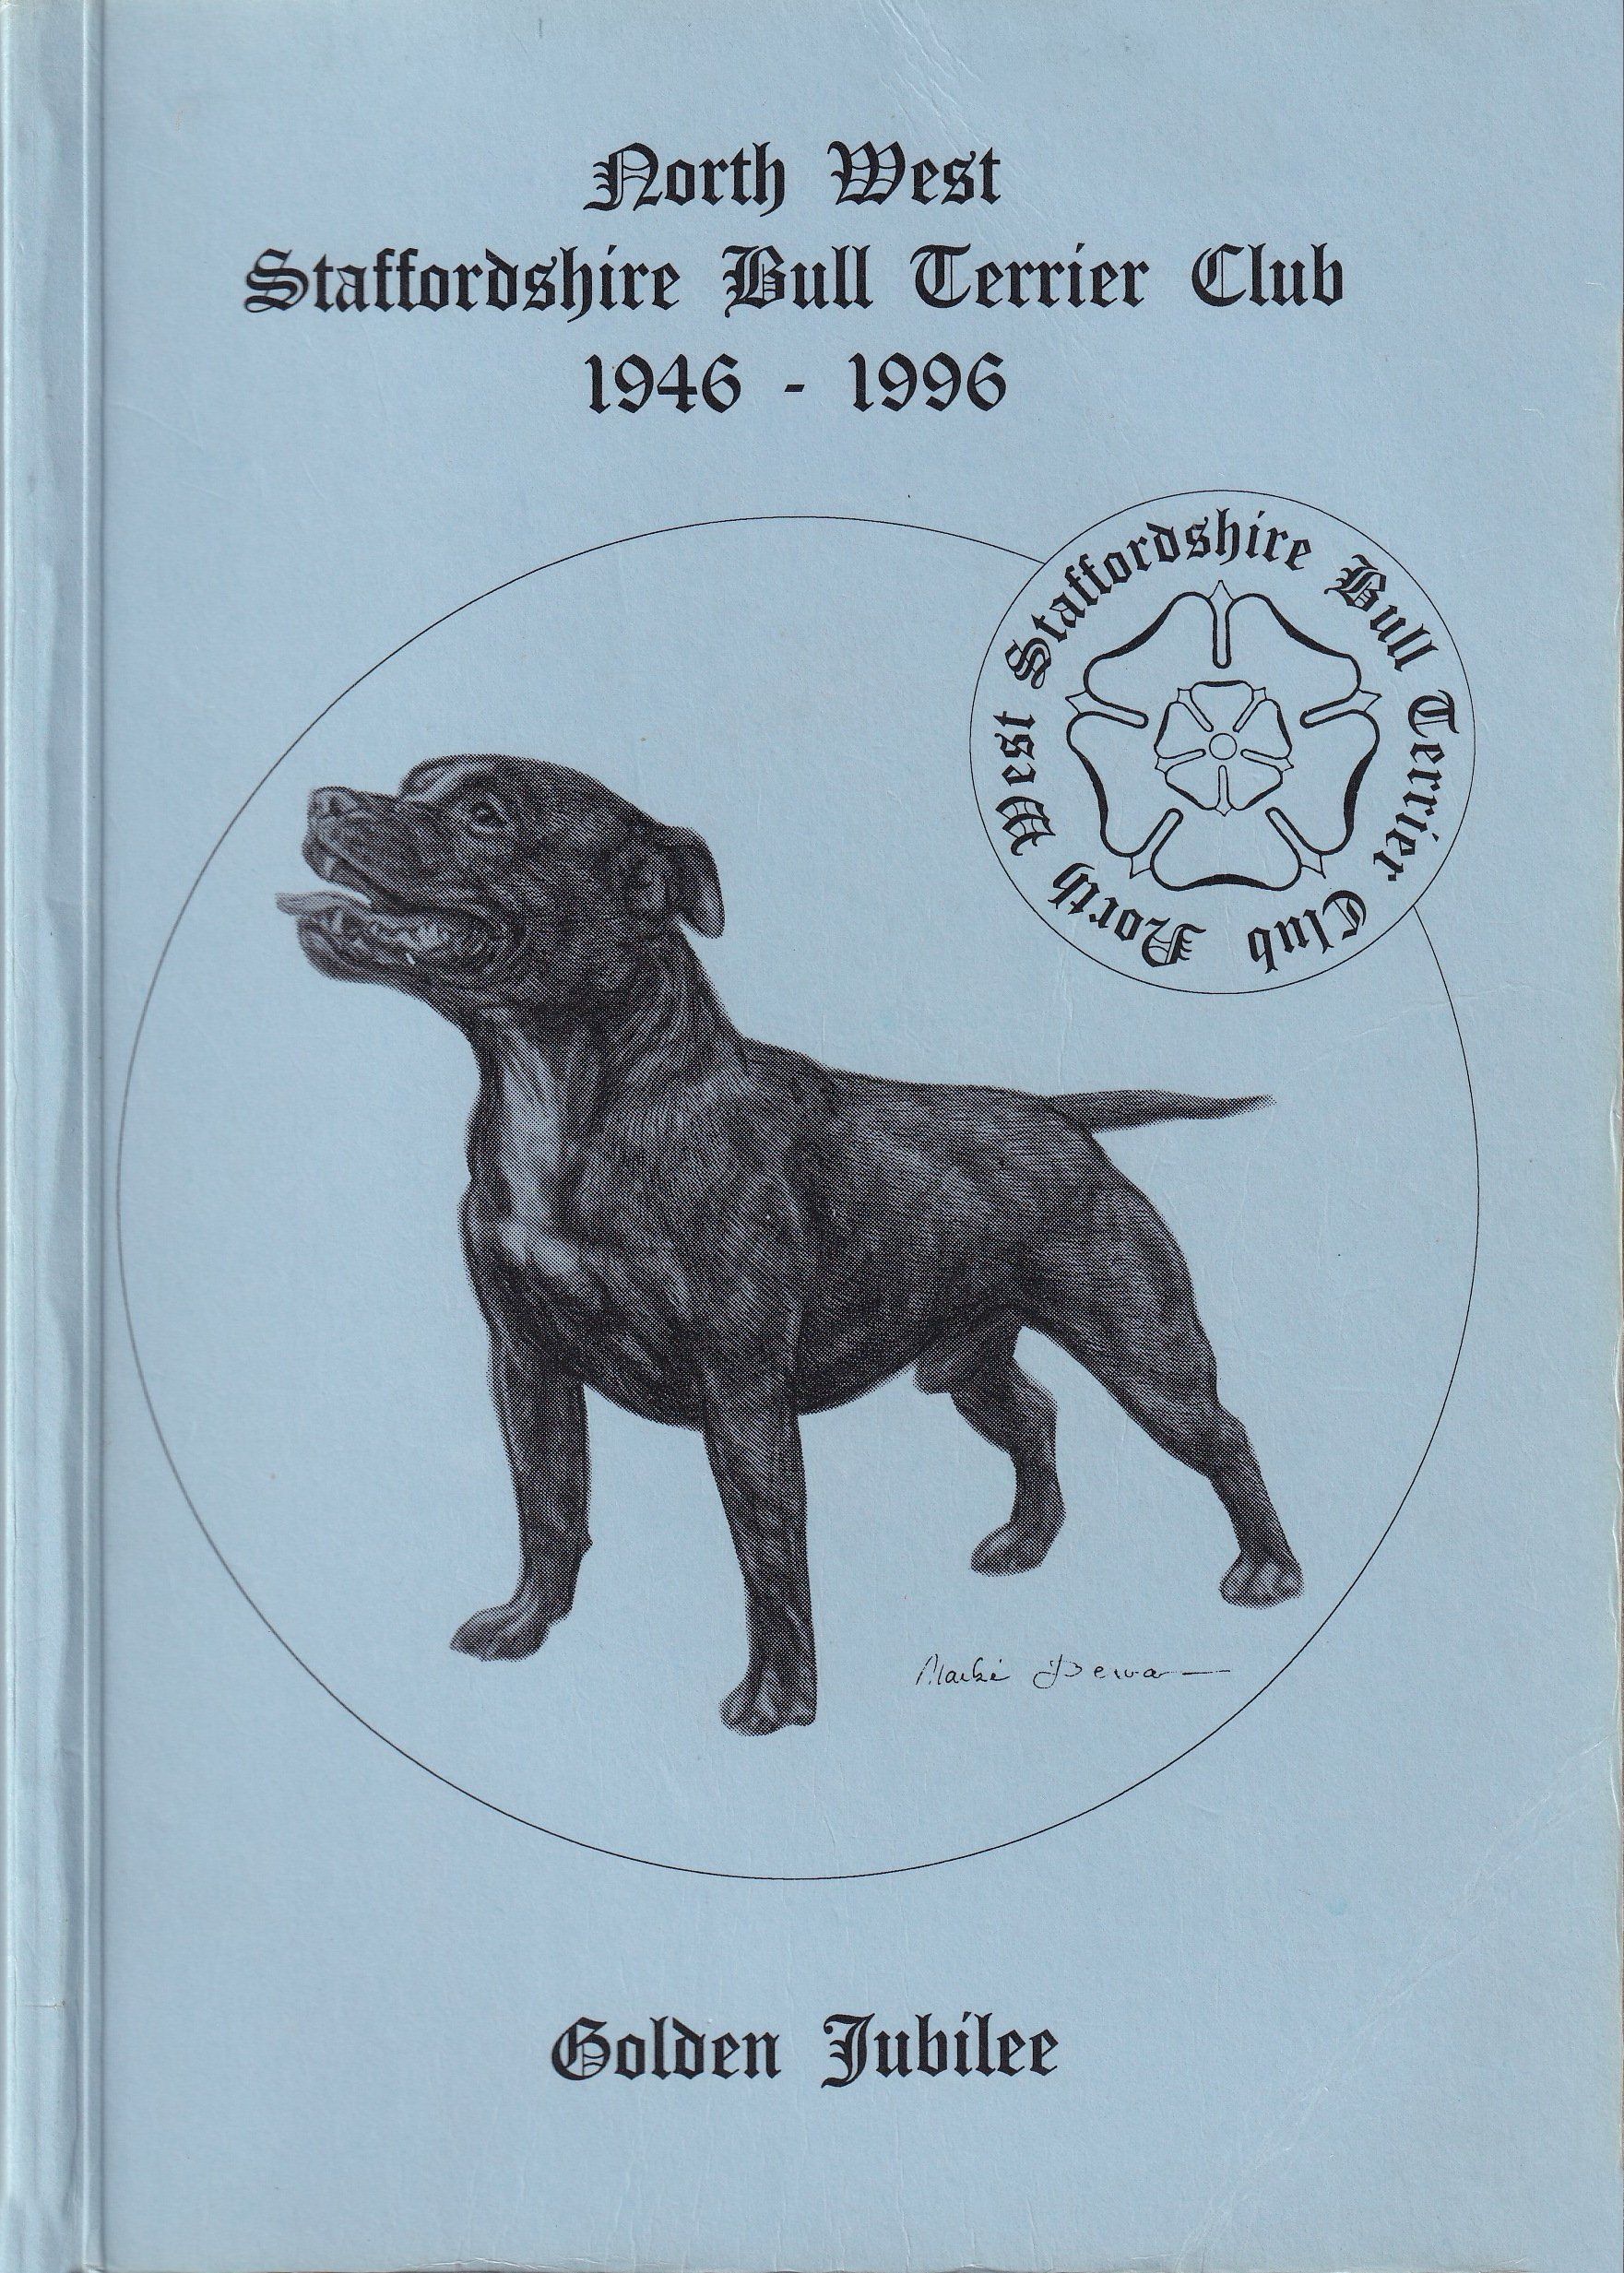 SBT Fun - North West Staffordshire Bull Terrier Club 1946 - 1996 Year Book Golden Jubilee